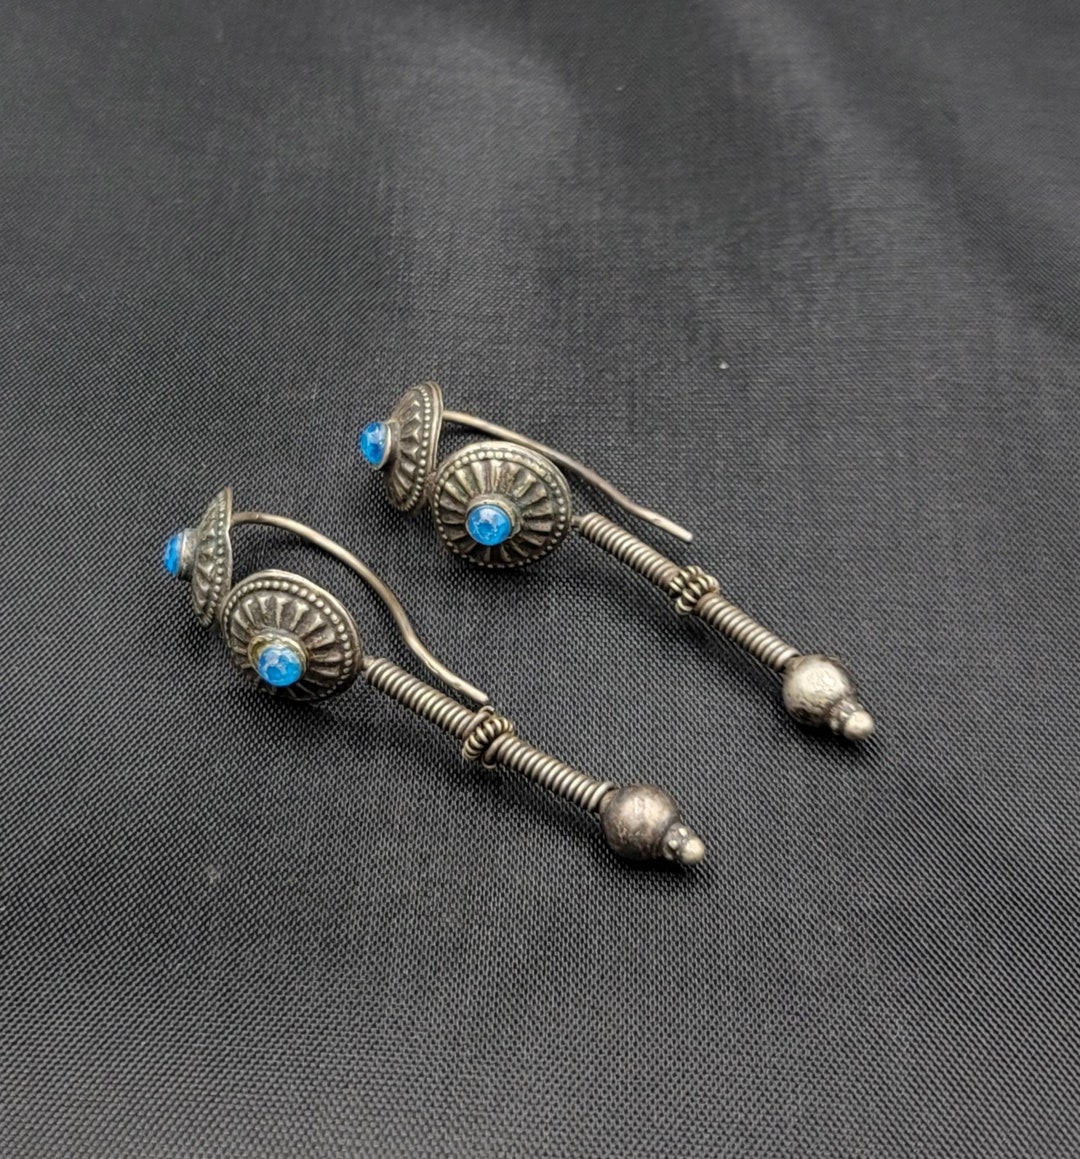 SUPER Unique Utman Empire Beautiful Antique Silver Earrings With Blue ...